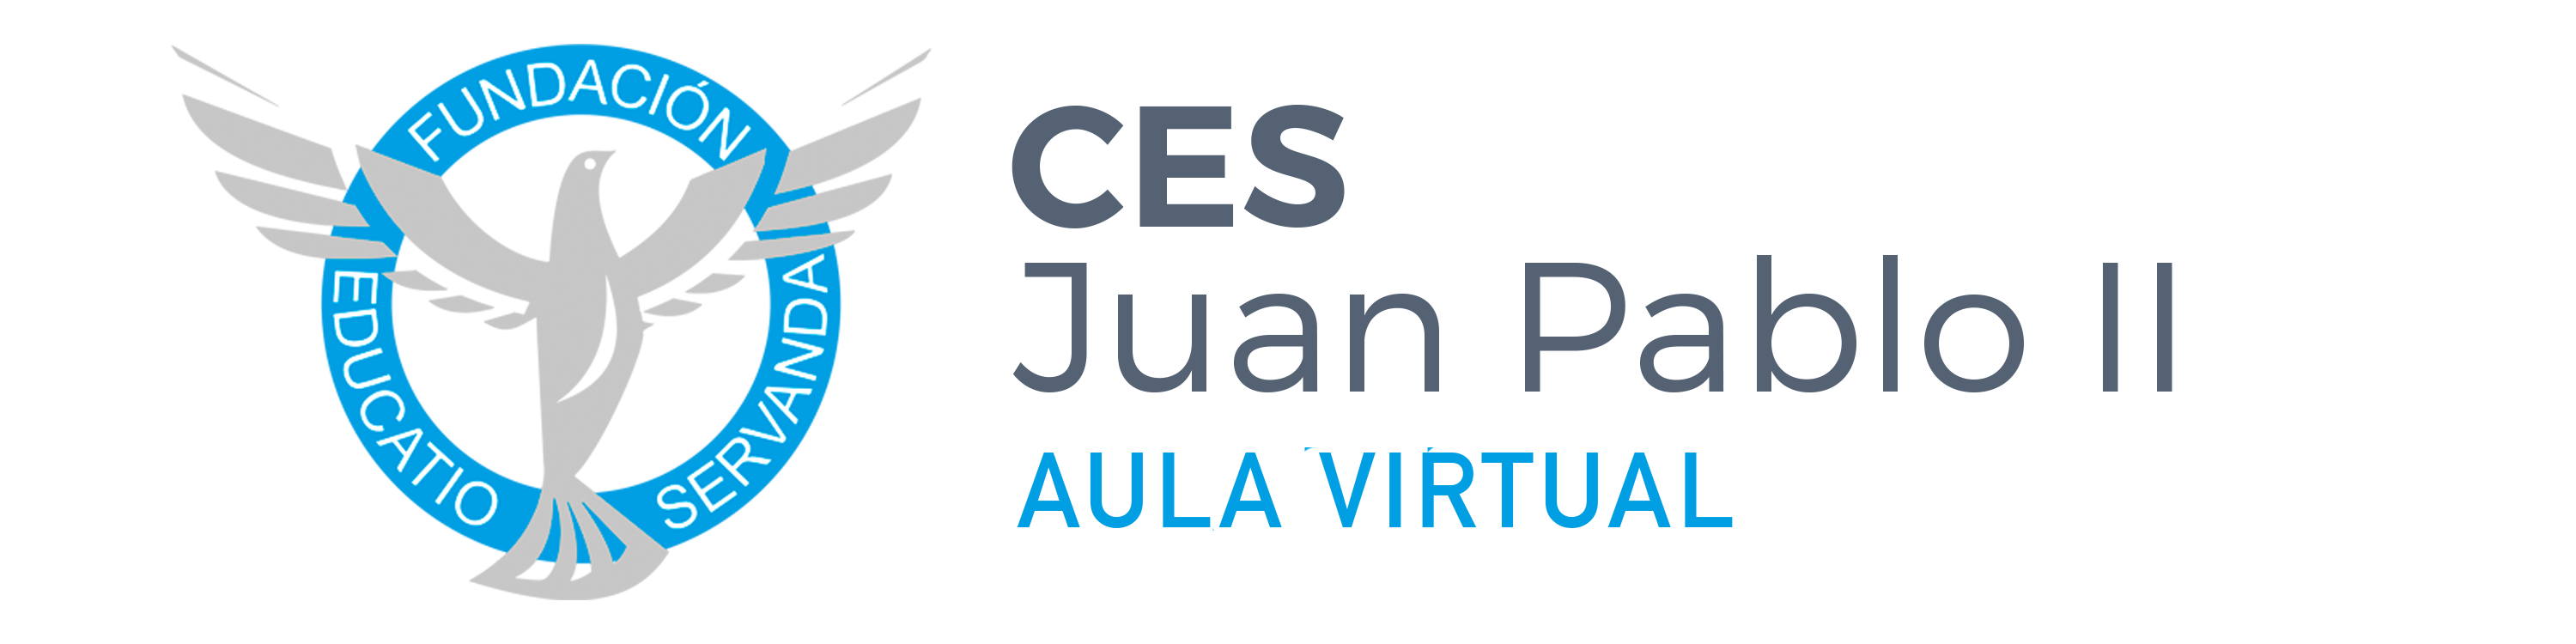 CES Juan Pablo II - Aula Virtual